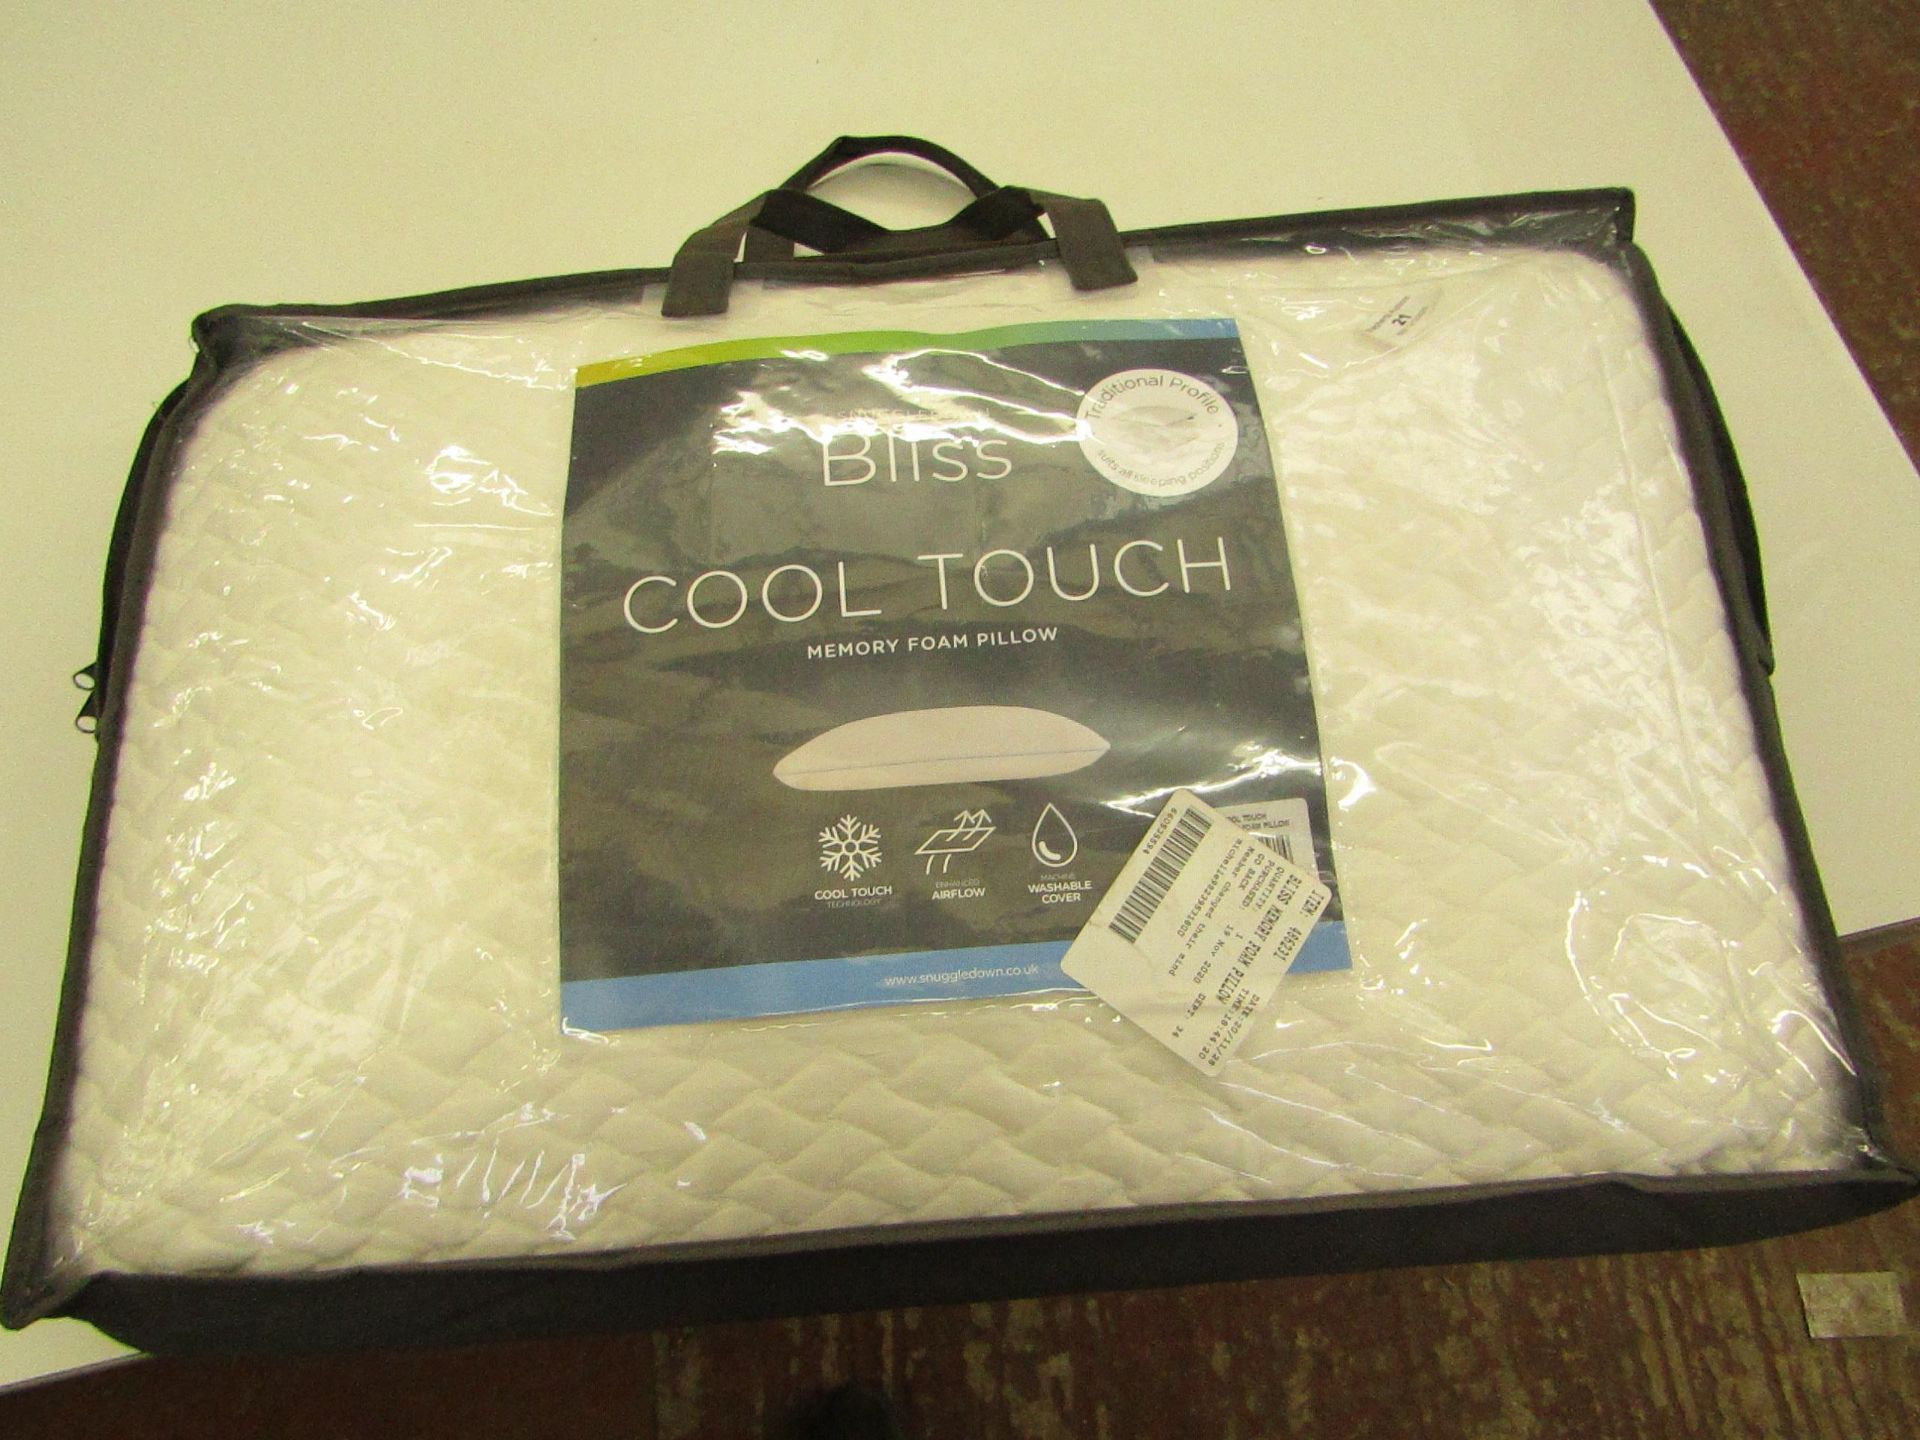 Bliss Cool Touch Memory Foam Pillow.New